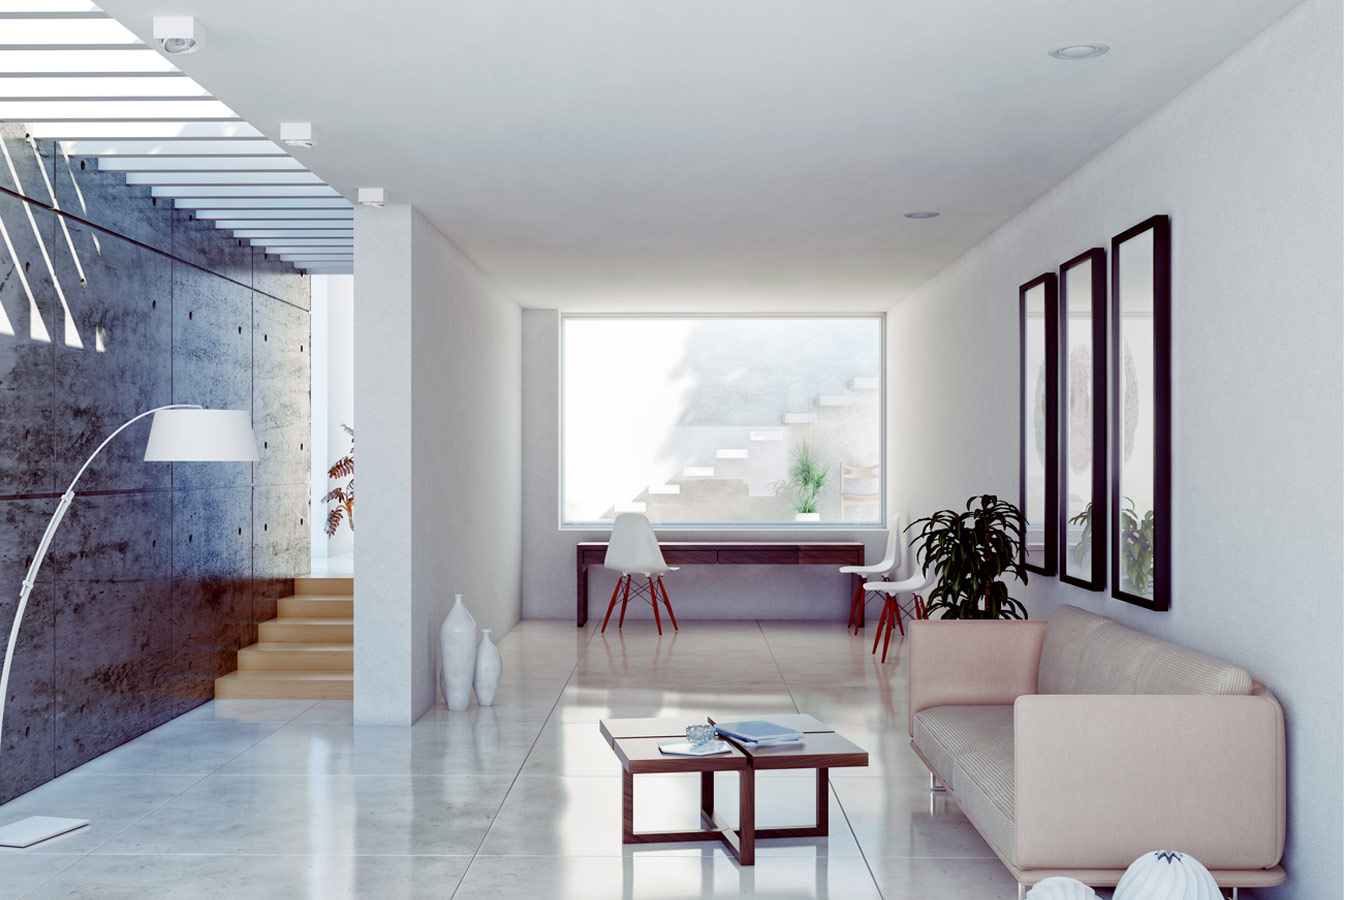 Onbehandelt beton als muur afwerking - moderne woonkamer met eames stoelen